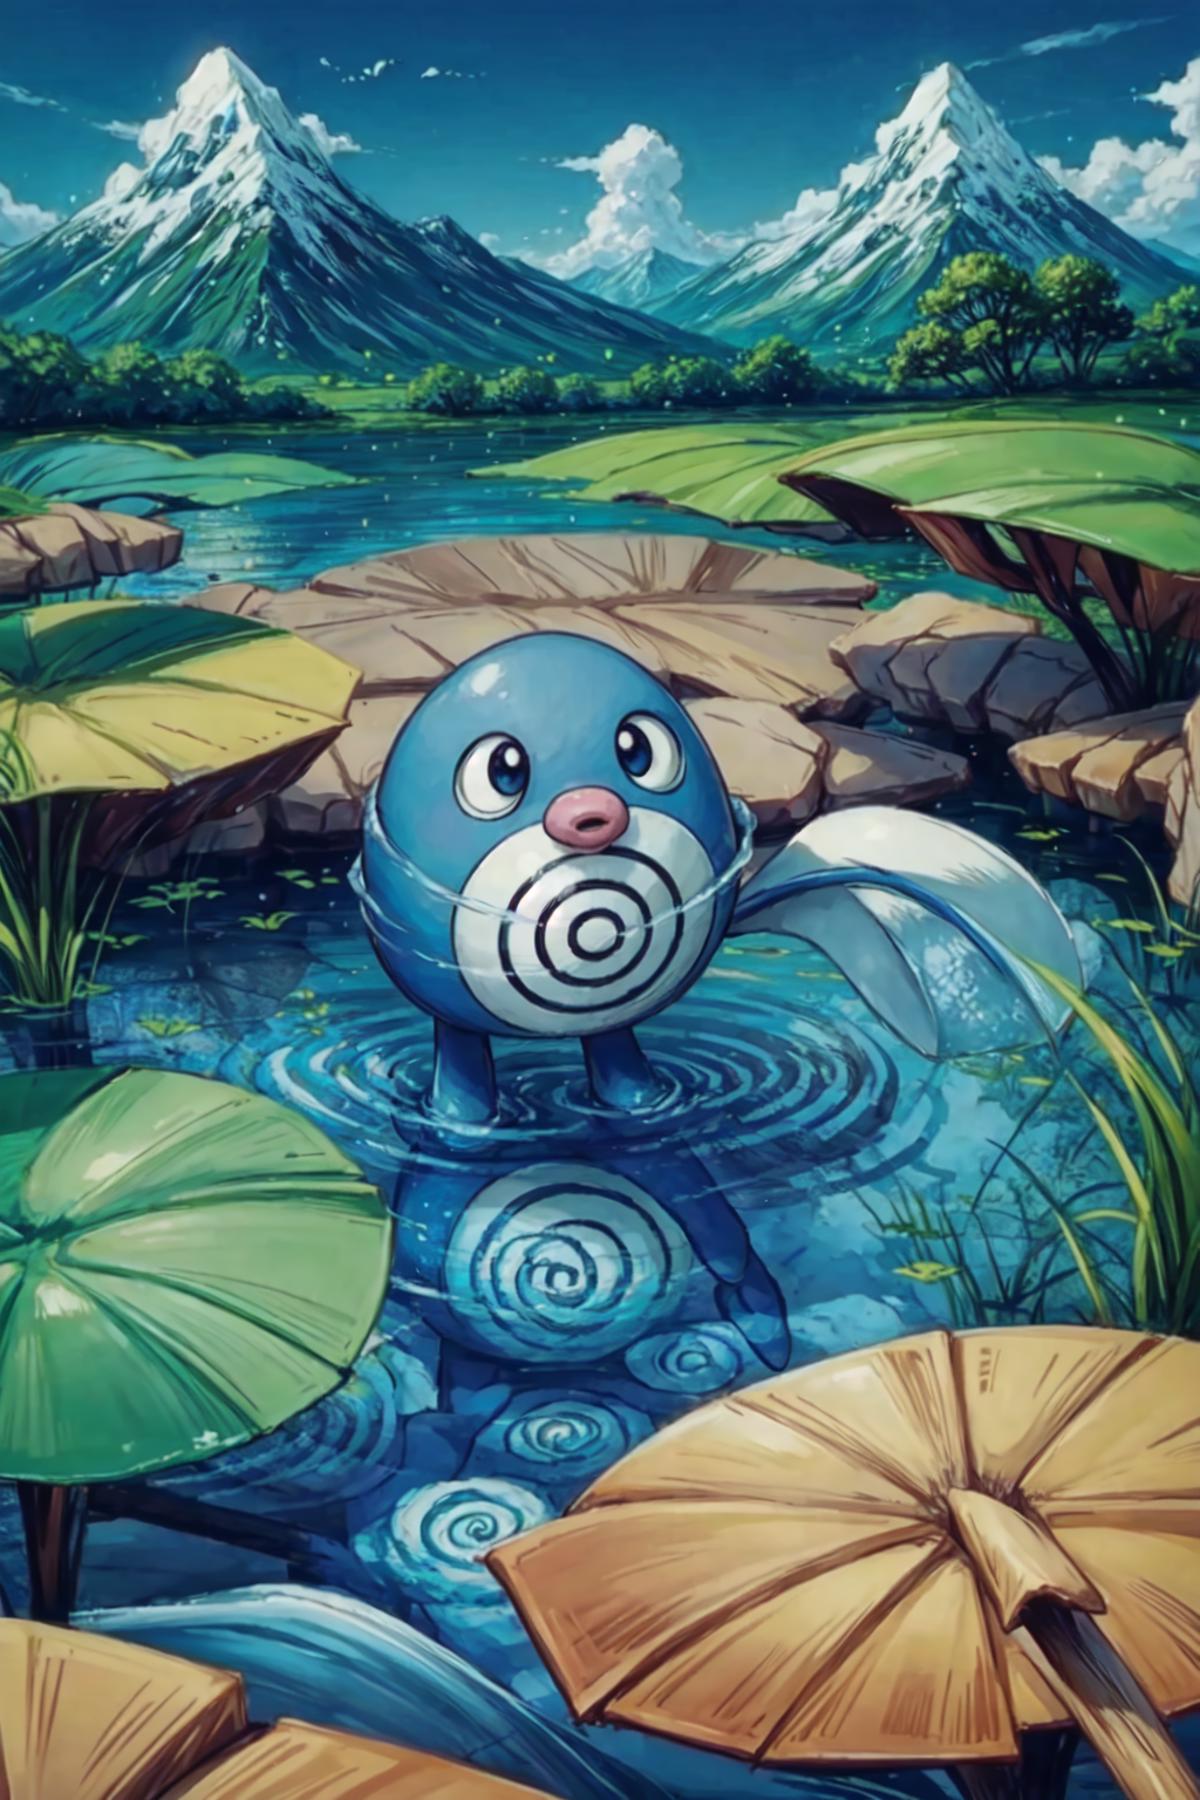 Poliwag (Pokemon) (Pokedex #0060) image by Kayako